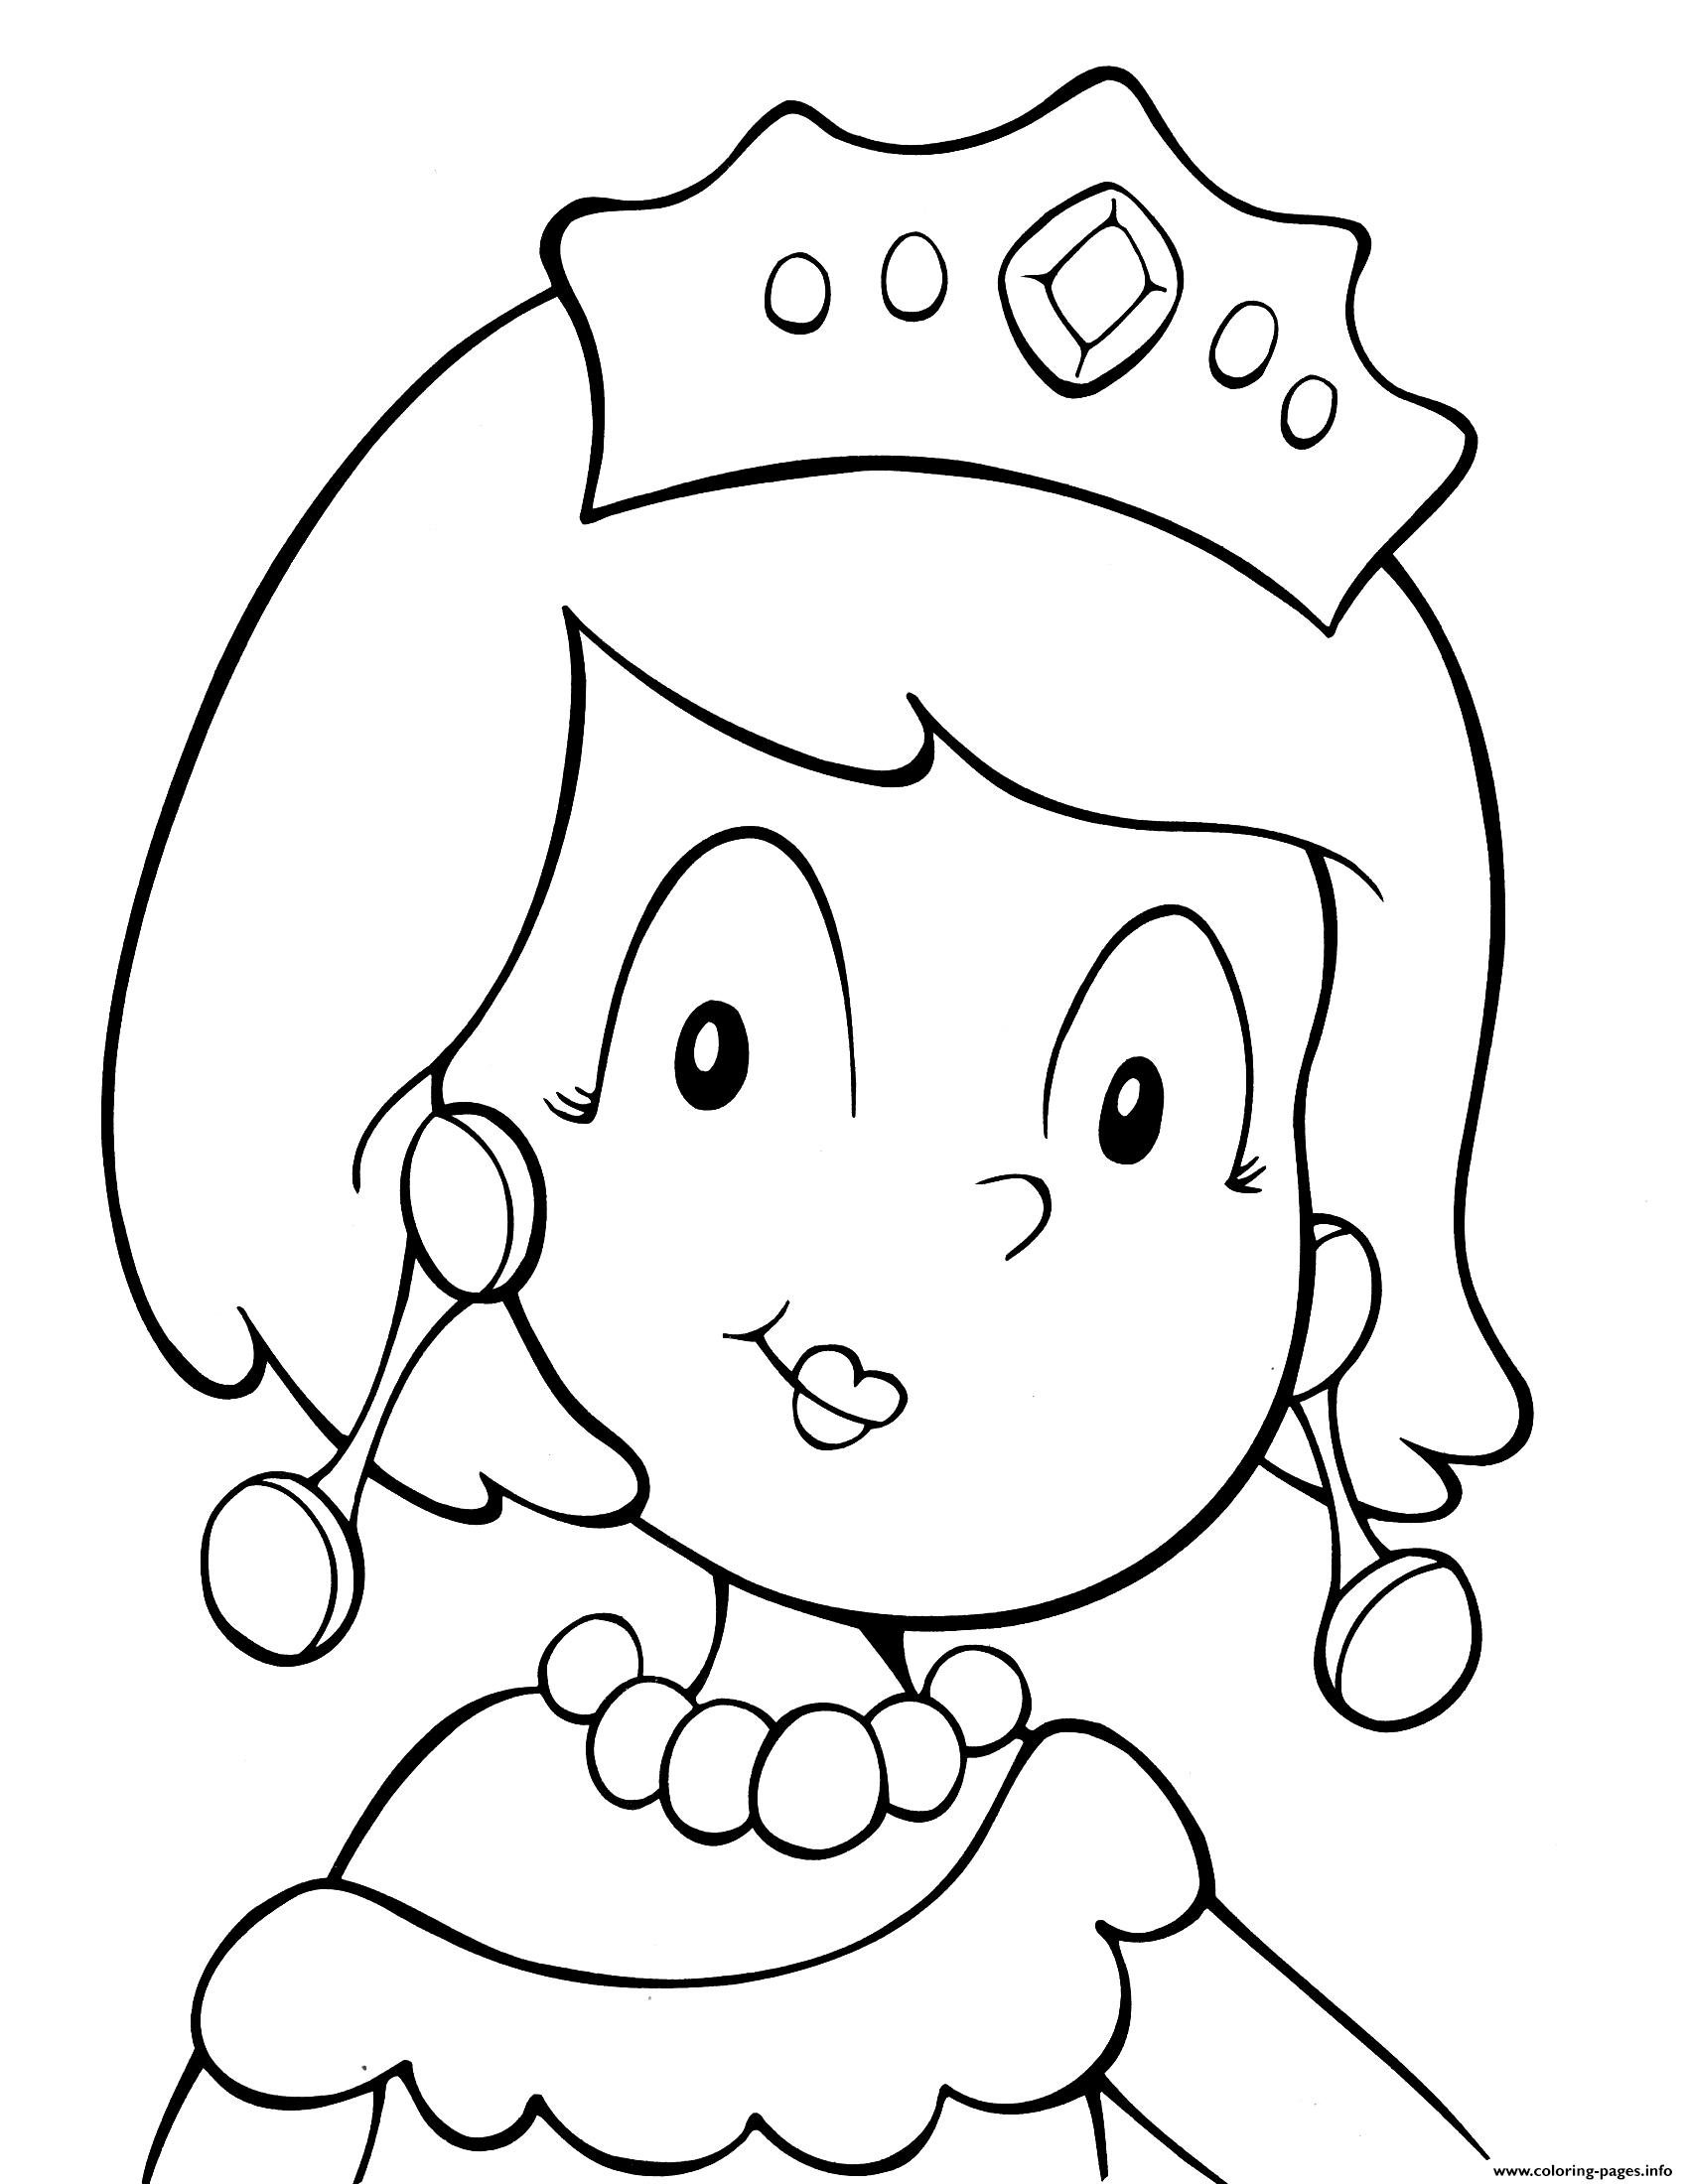 Crayola Princess coloring